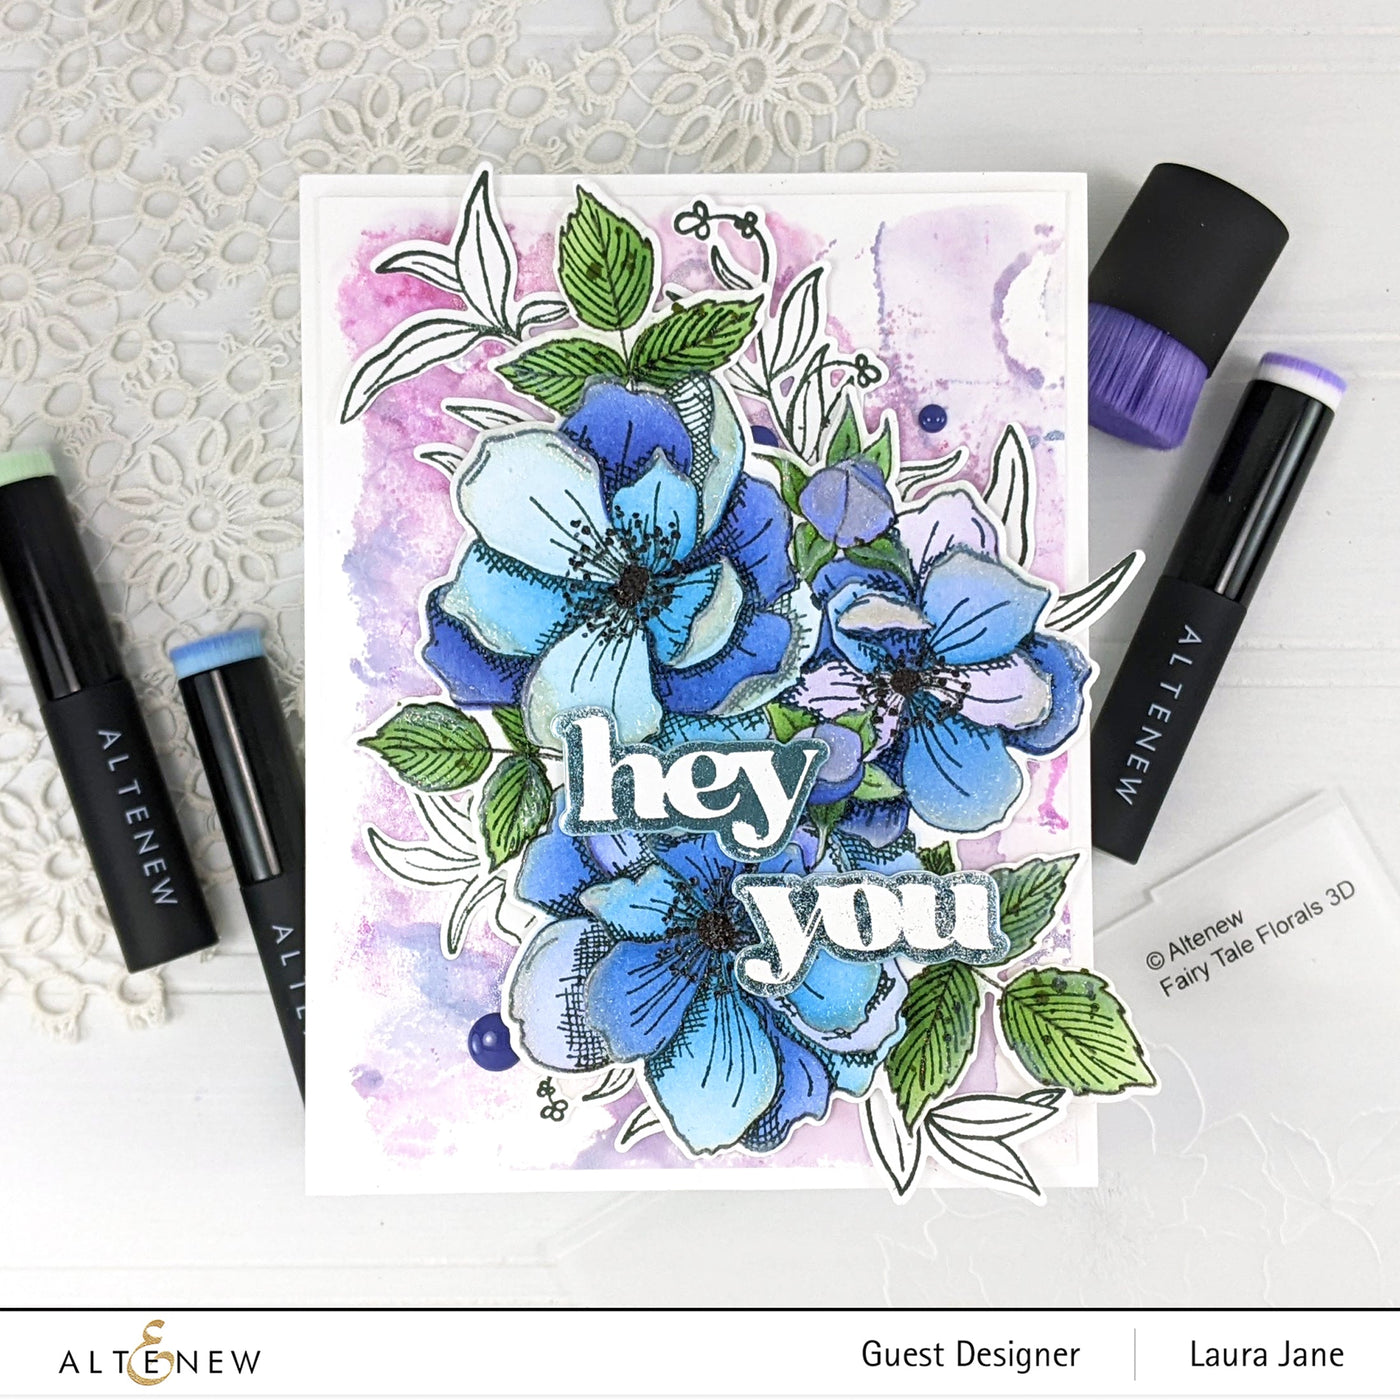 Stamp & Die & Stencil & Embossing Folder Bundle Fairy Tale Florals